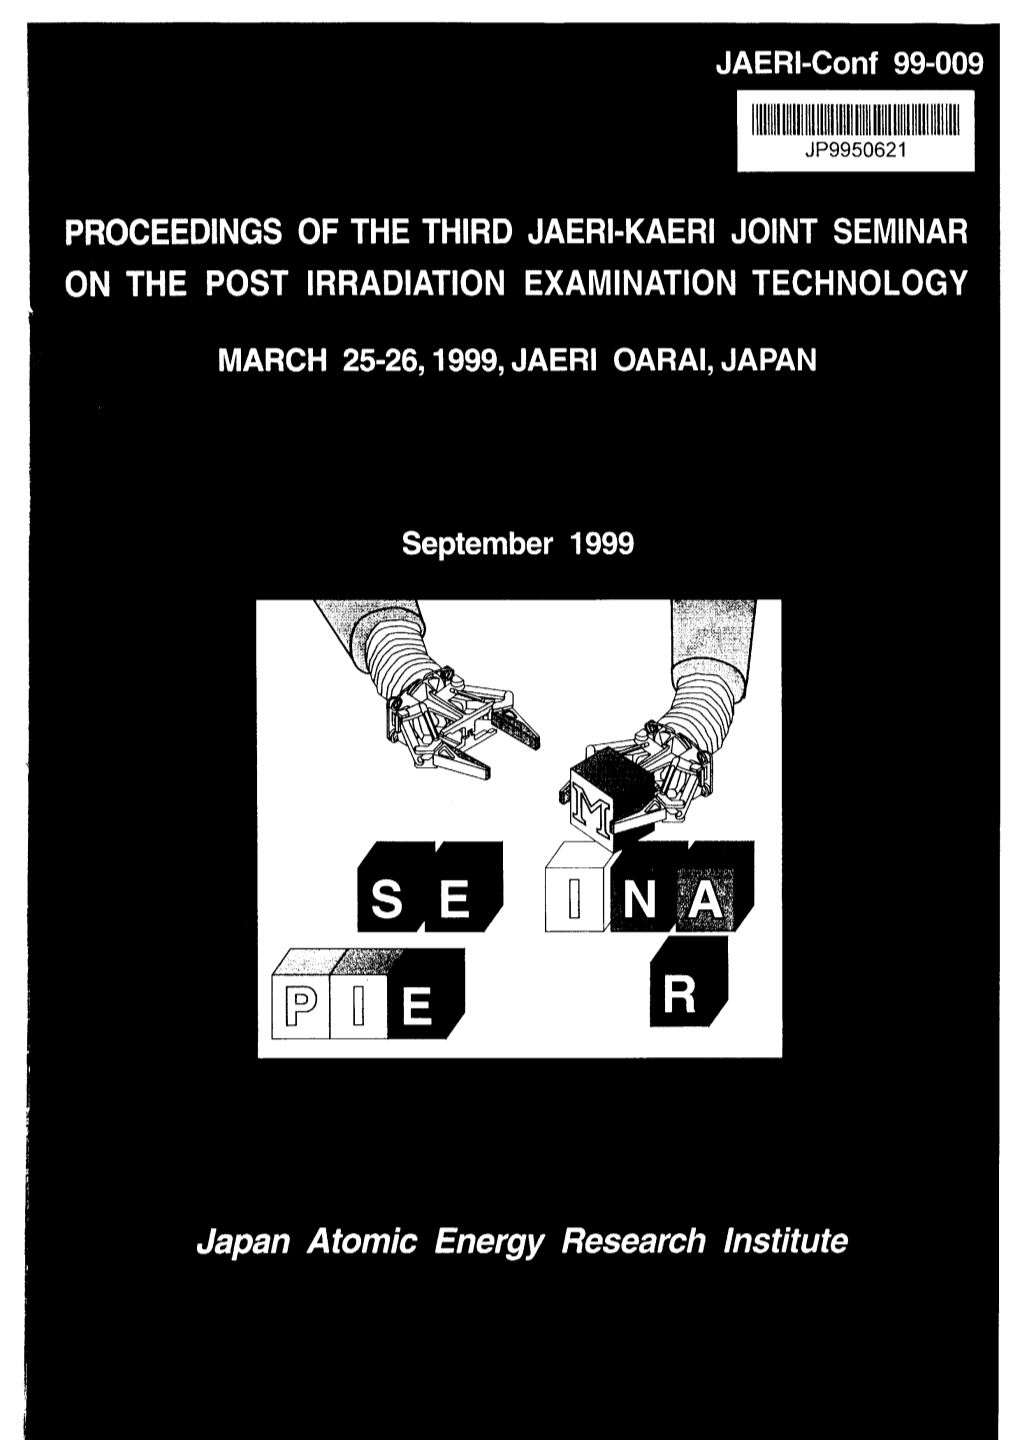 Proceedings of the Third JAERI-KAERI Joint Seminar on Post Irradiation Examination Technology March 25-26, 1999, JAERI Oarai, Japan